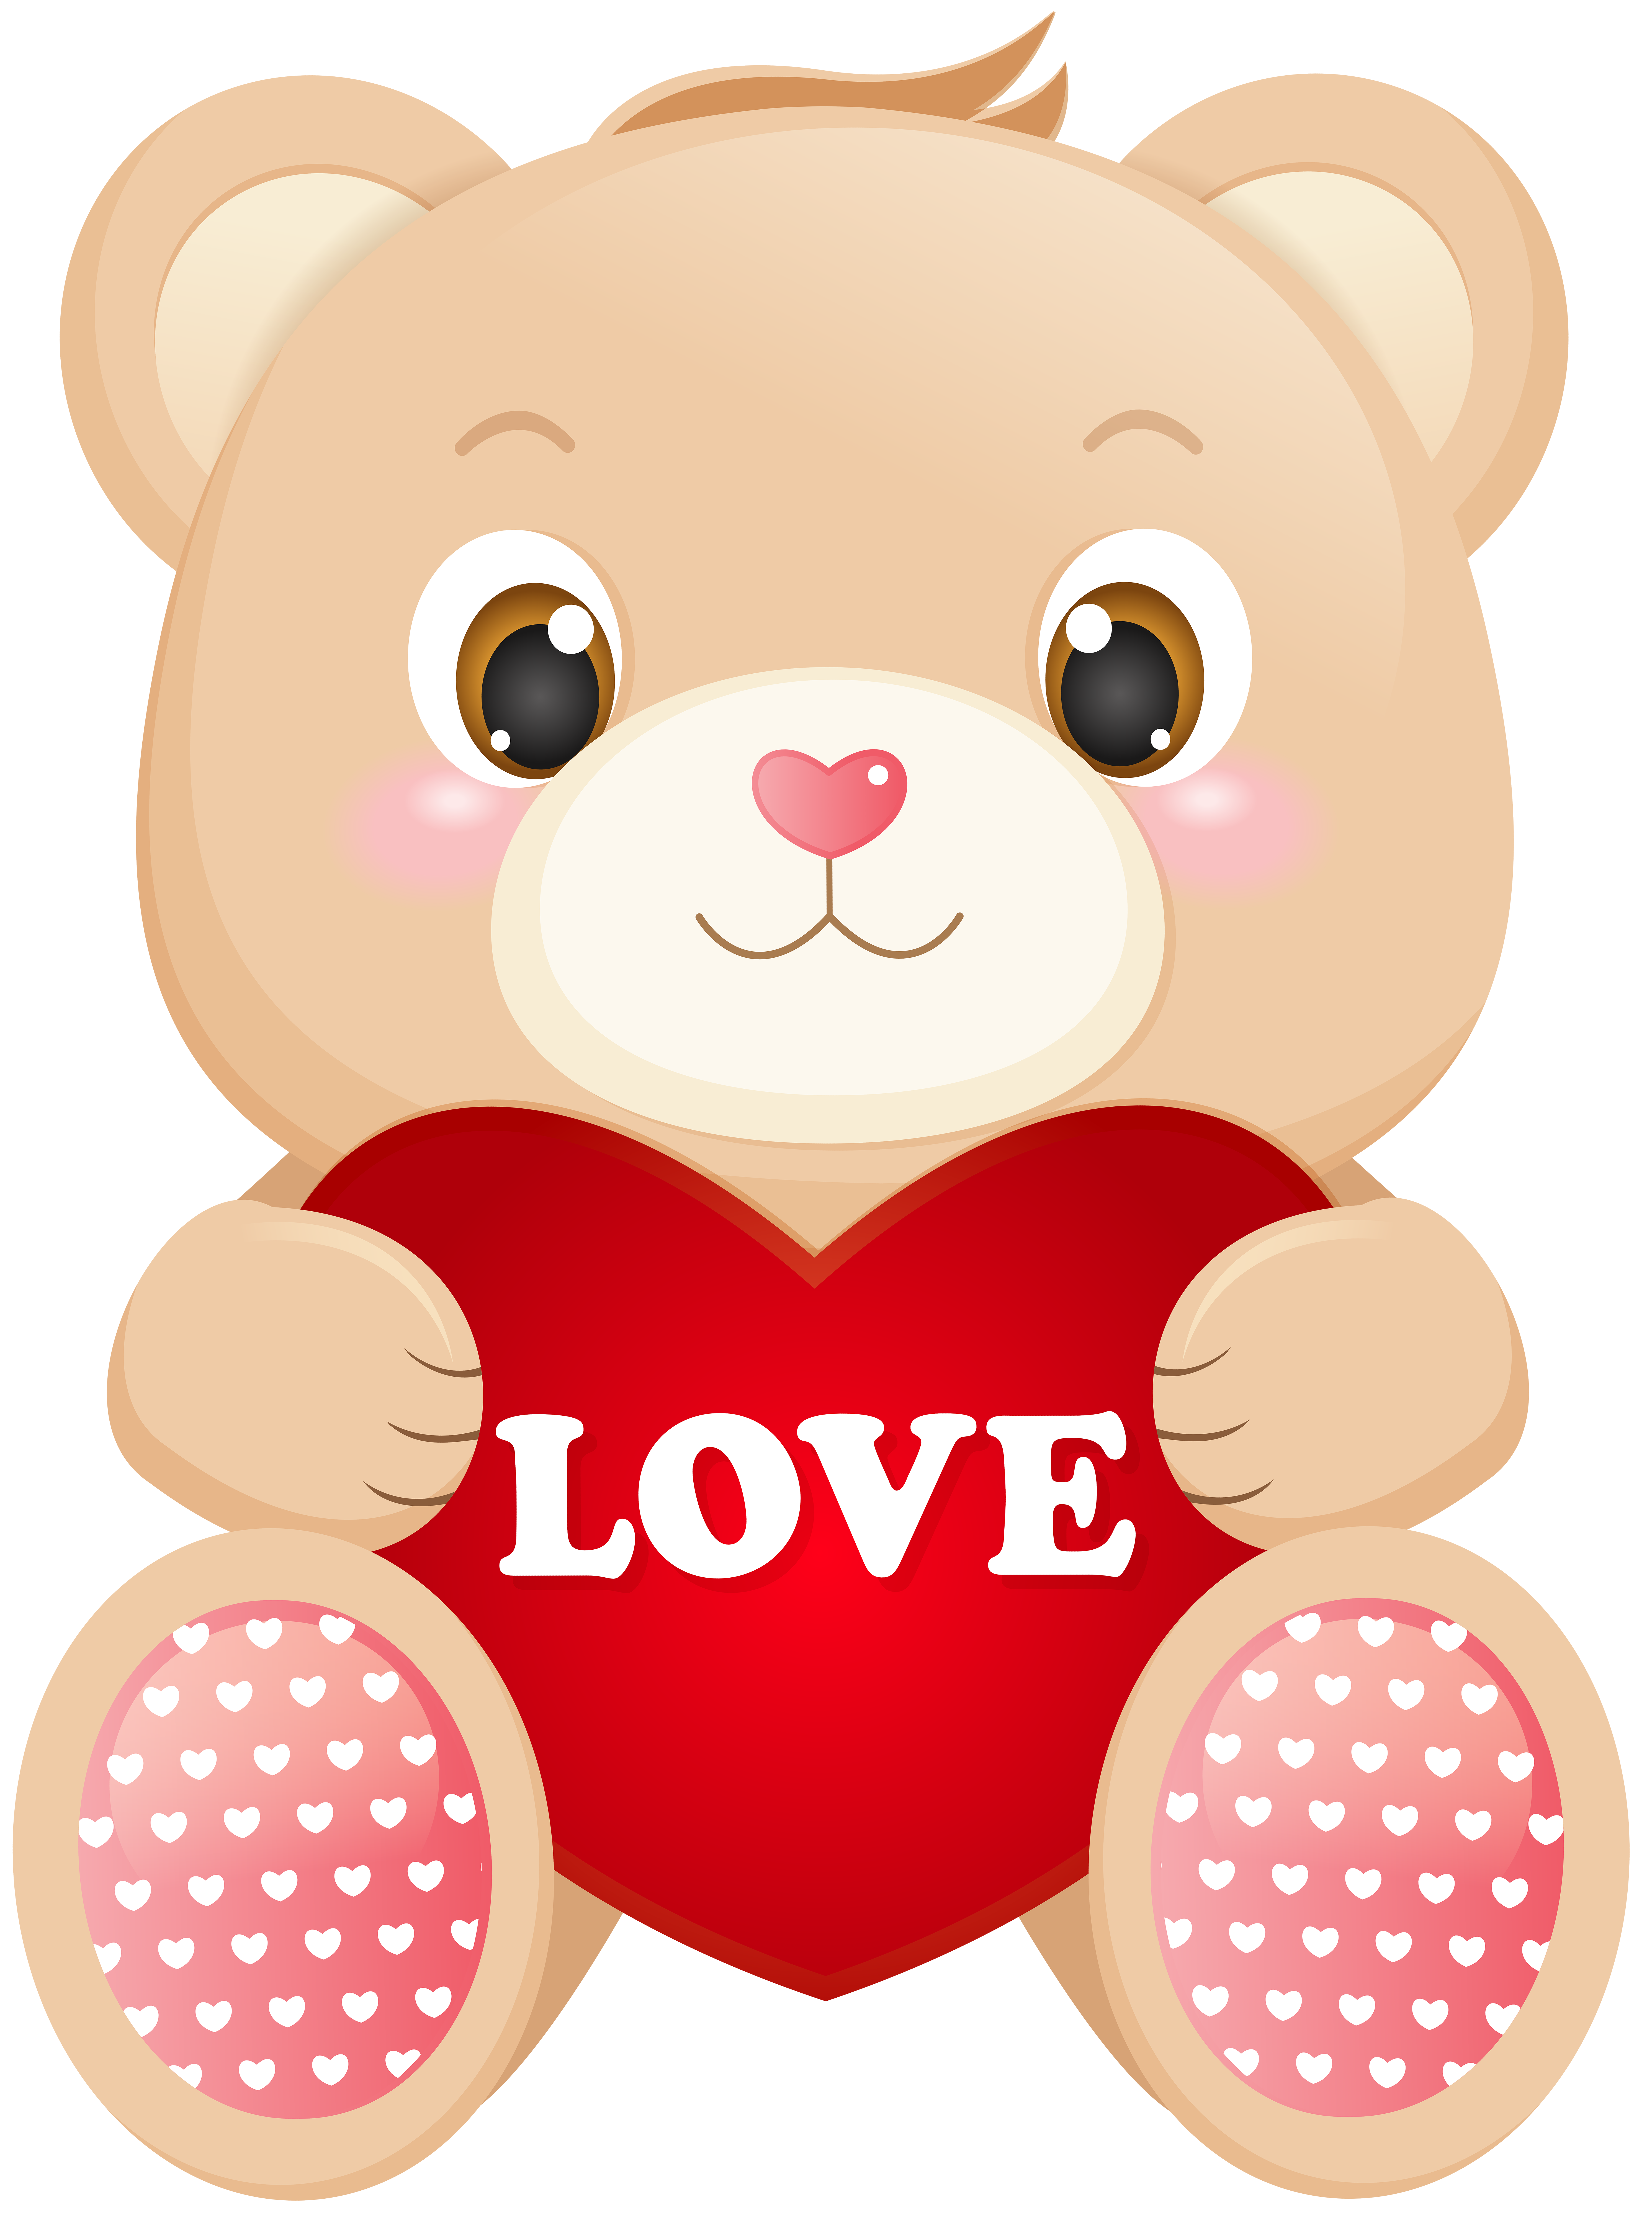 teddy with love heart